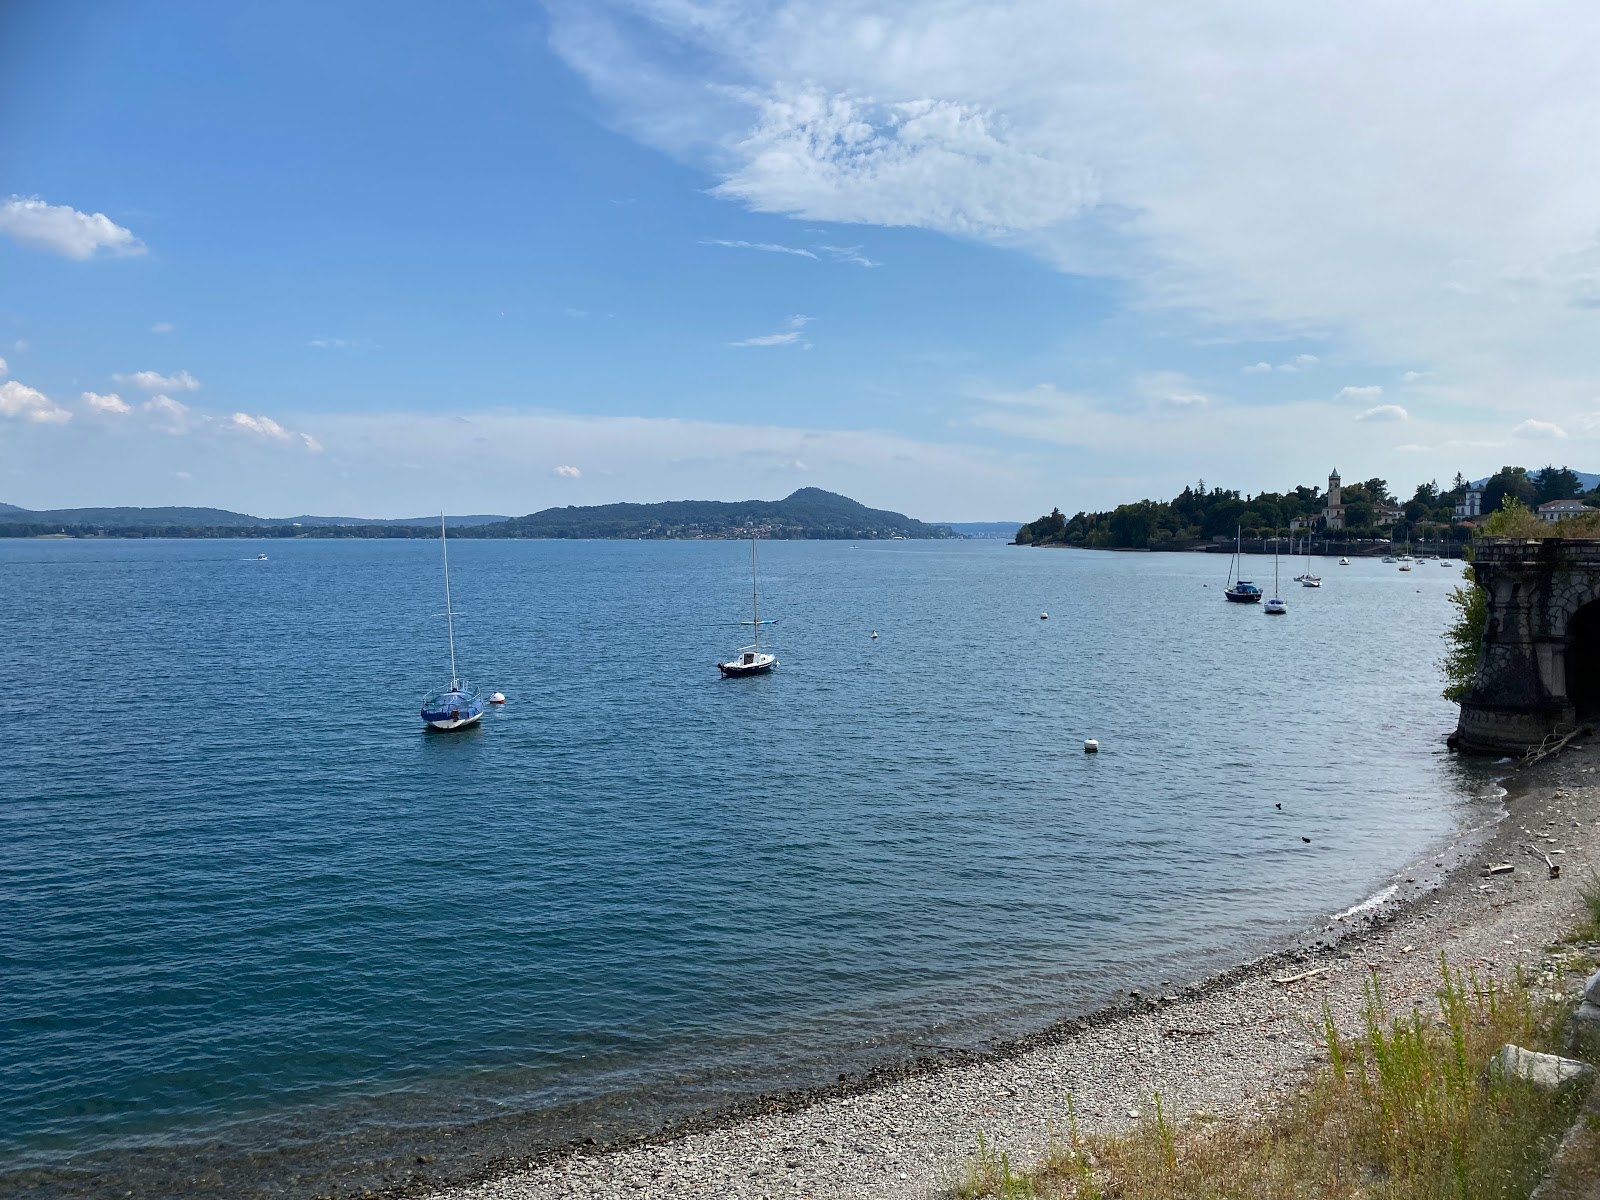 Spiaggia Lago Maggiore'in fotoğrafı vahşi alan